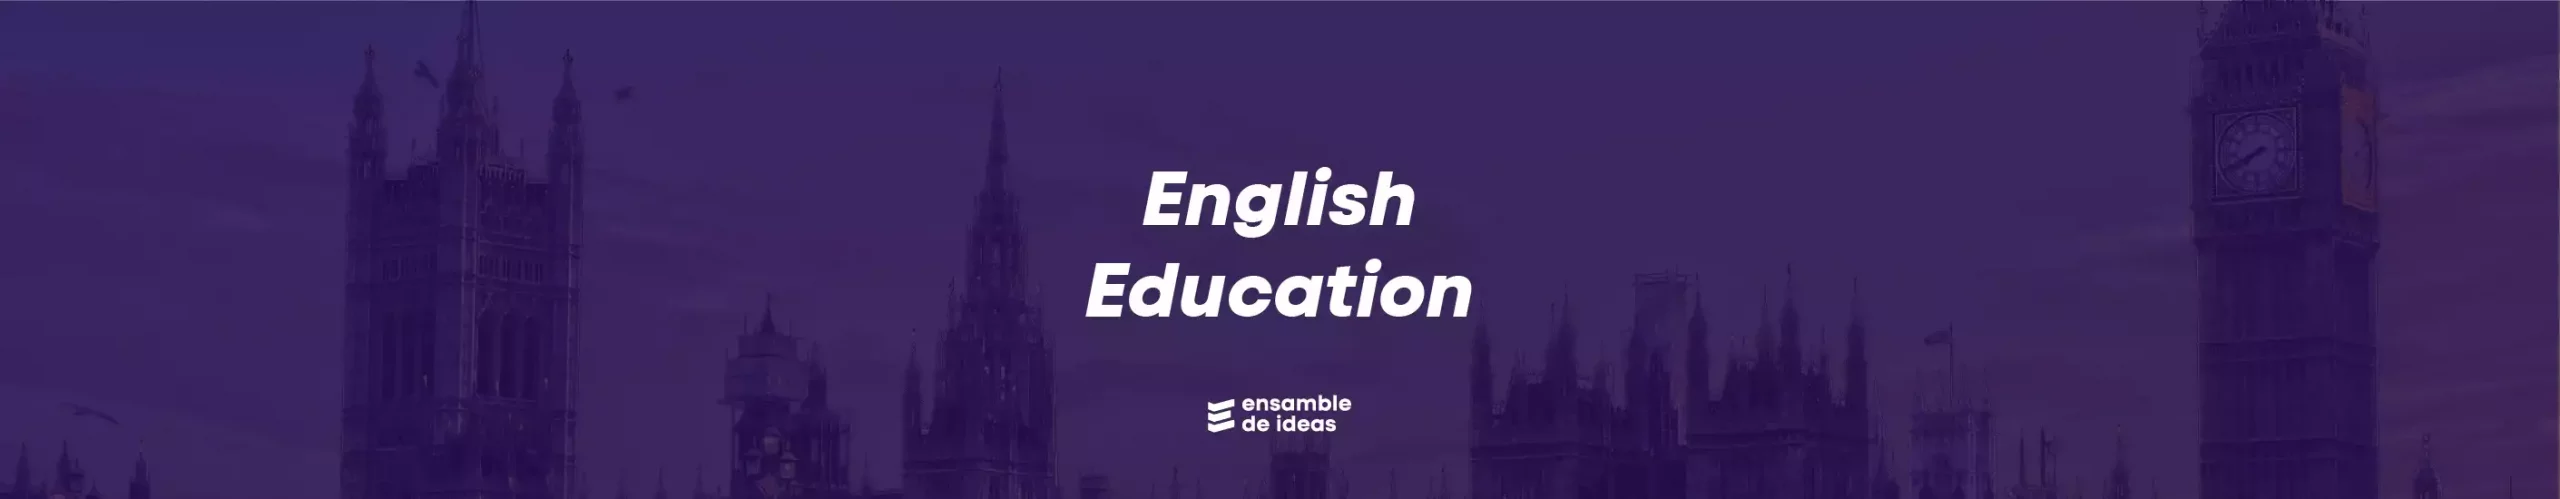 english education banner webp